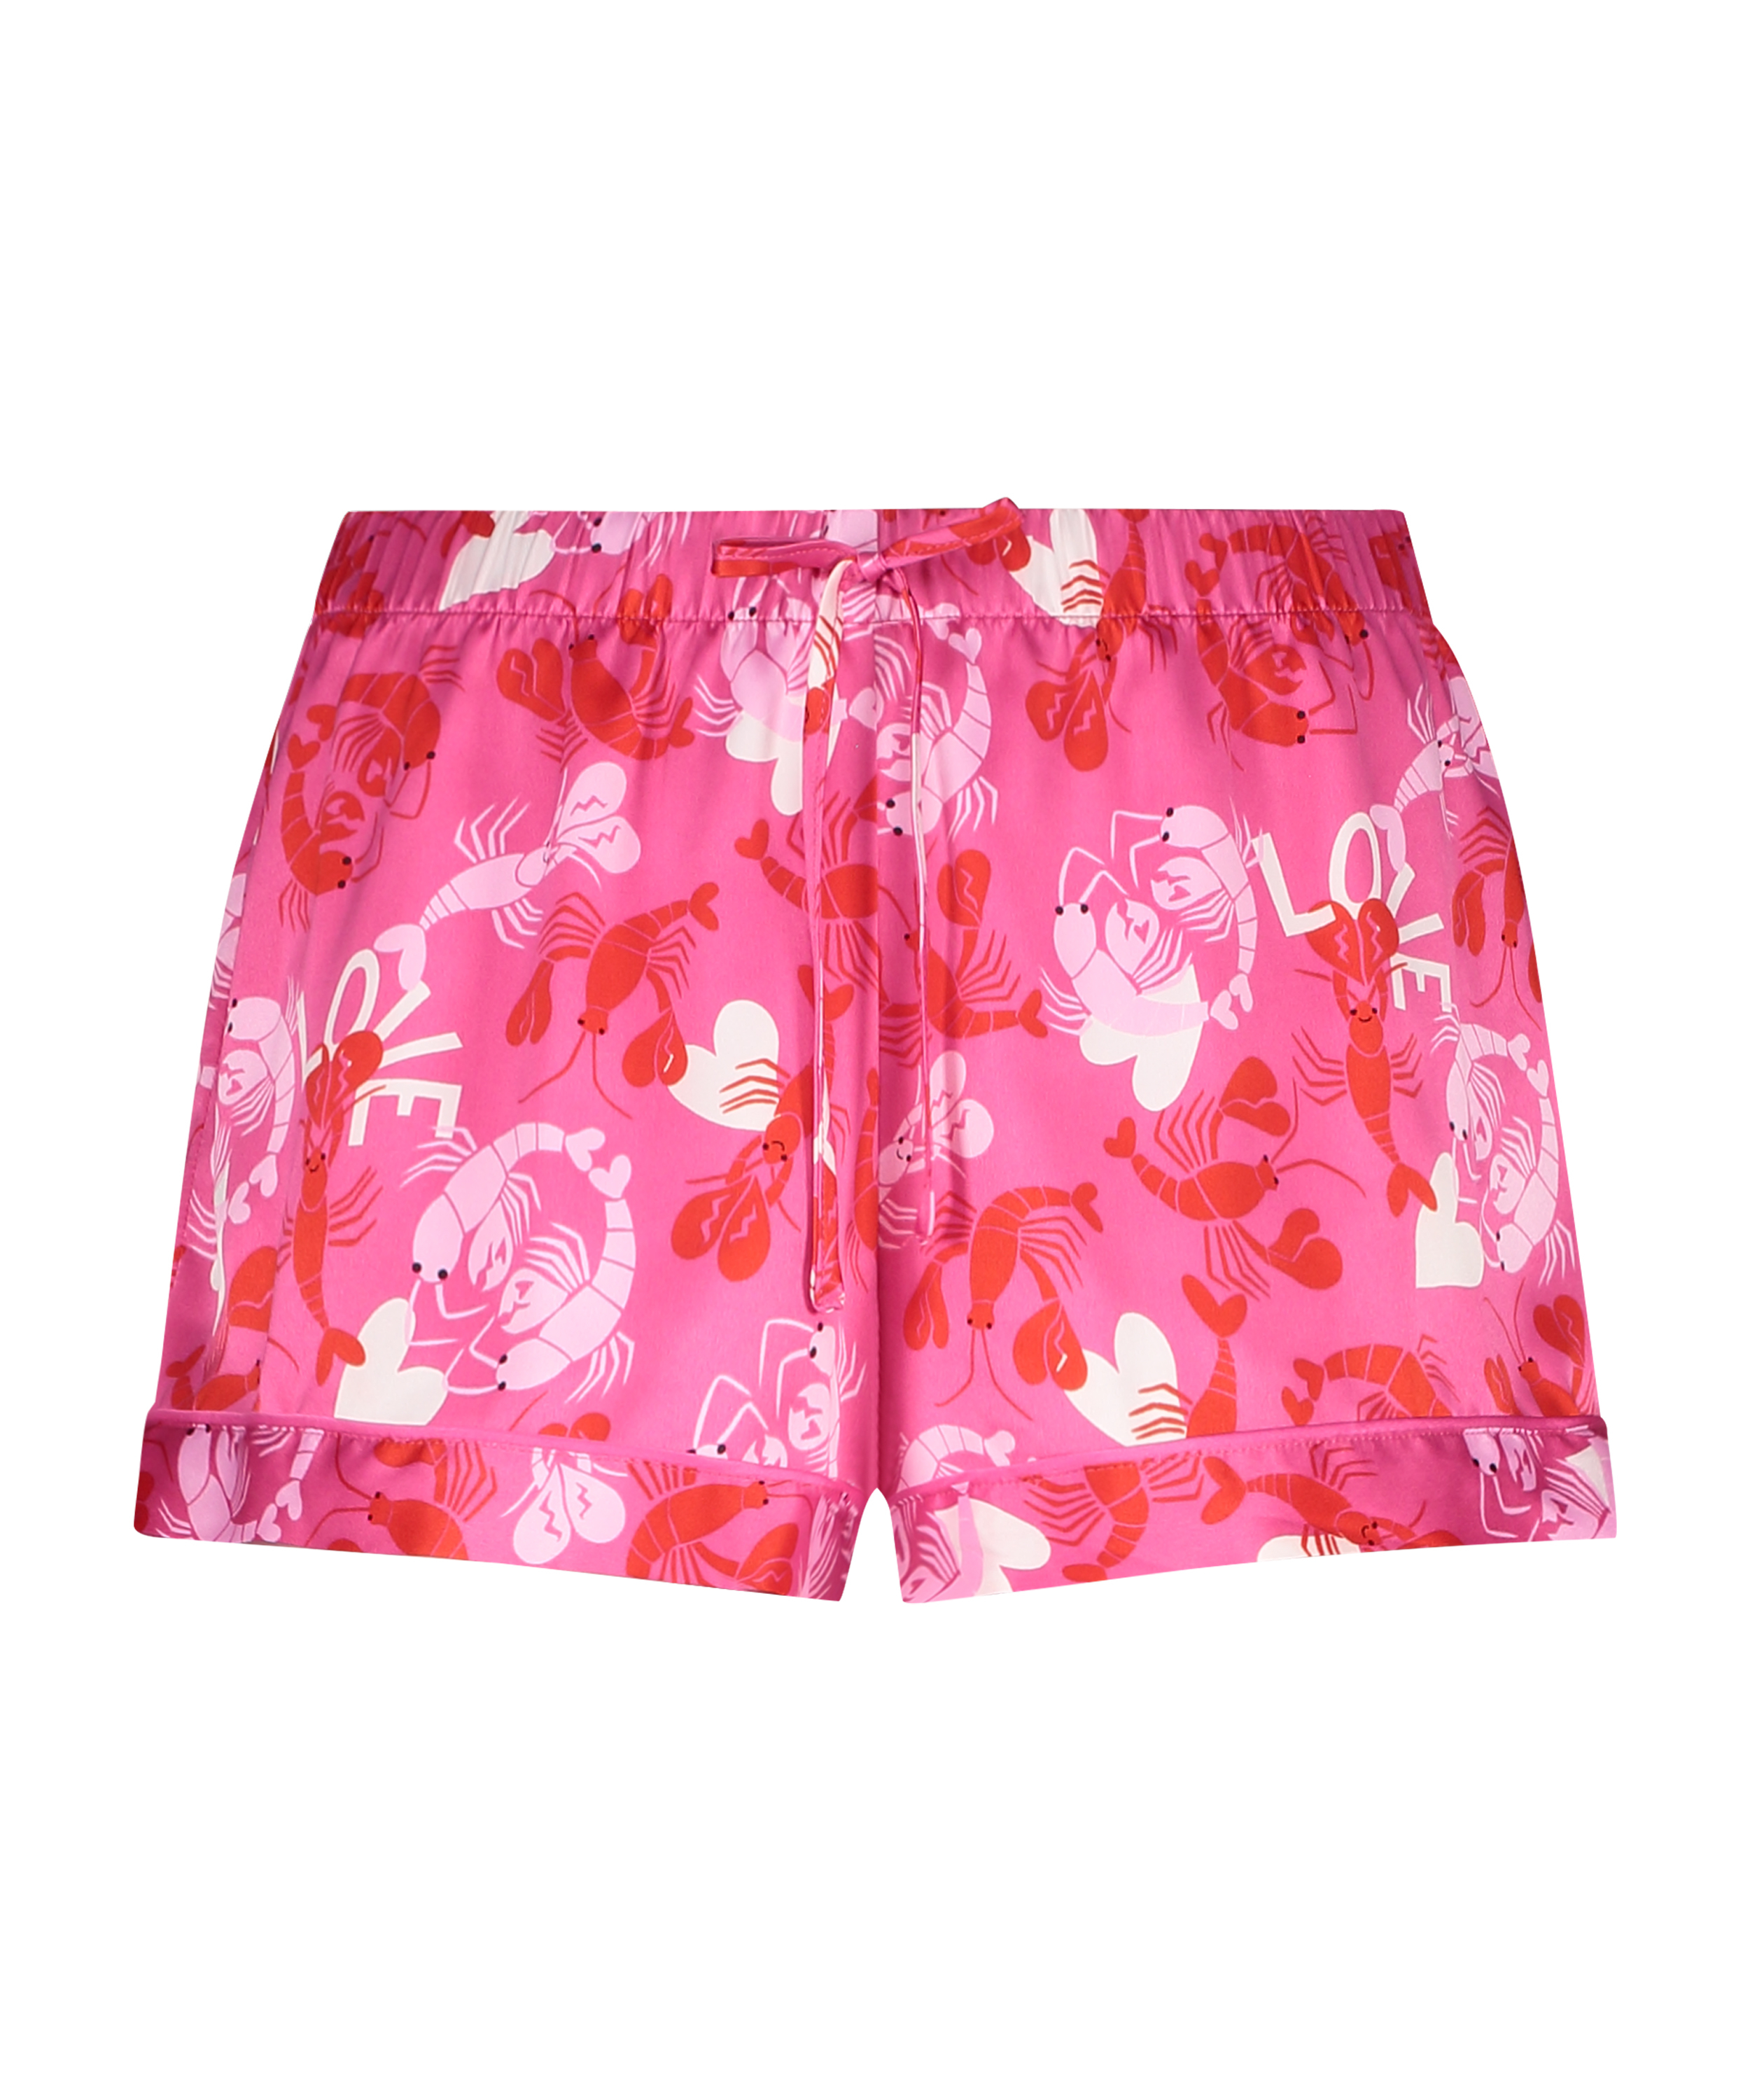 Satin pyjama shorts, Pink, main